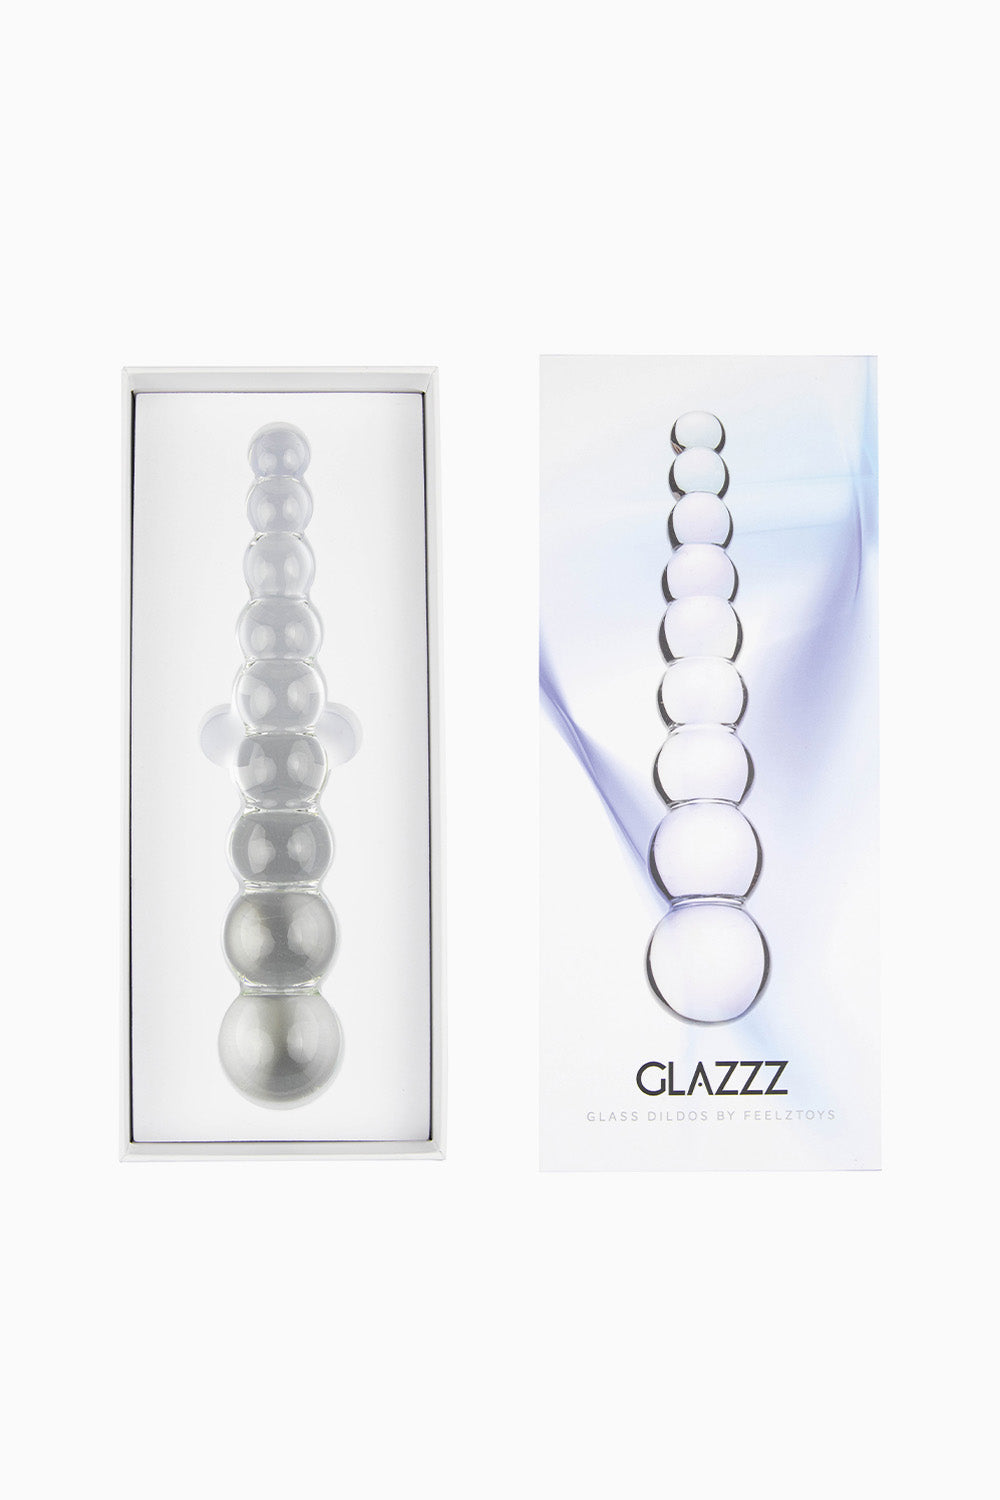 FeelzToys Glazzz Glass Dildo Crystal Delight, 8.5 Inches